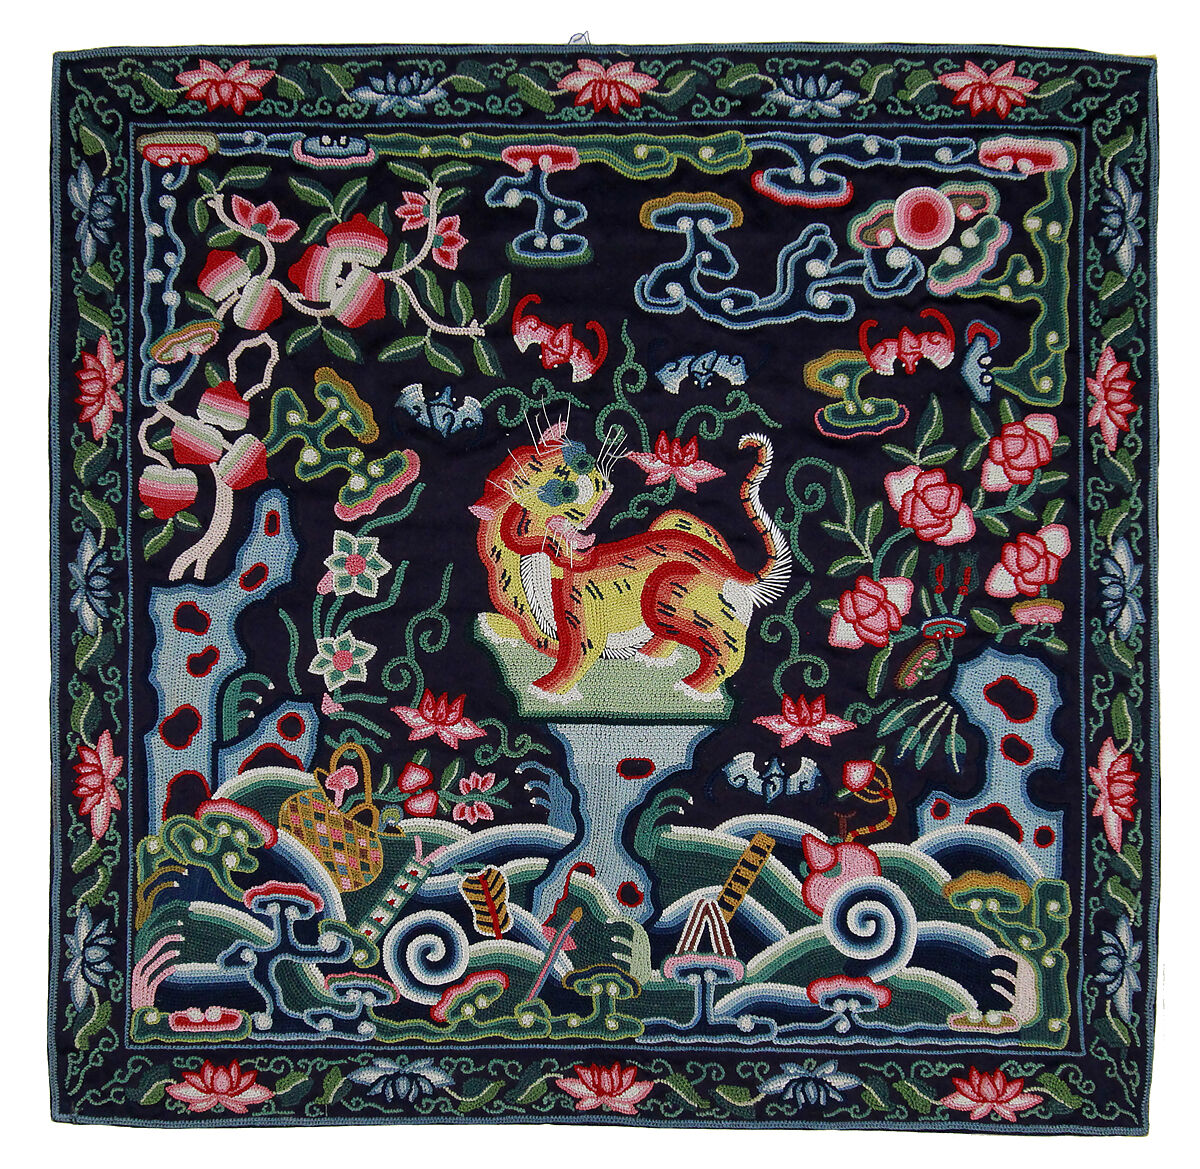 Rank badge with tiger, Silk thread embroidery on silk satin, China 